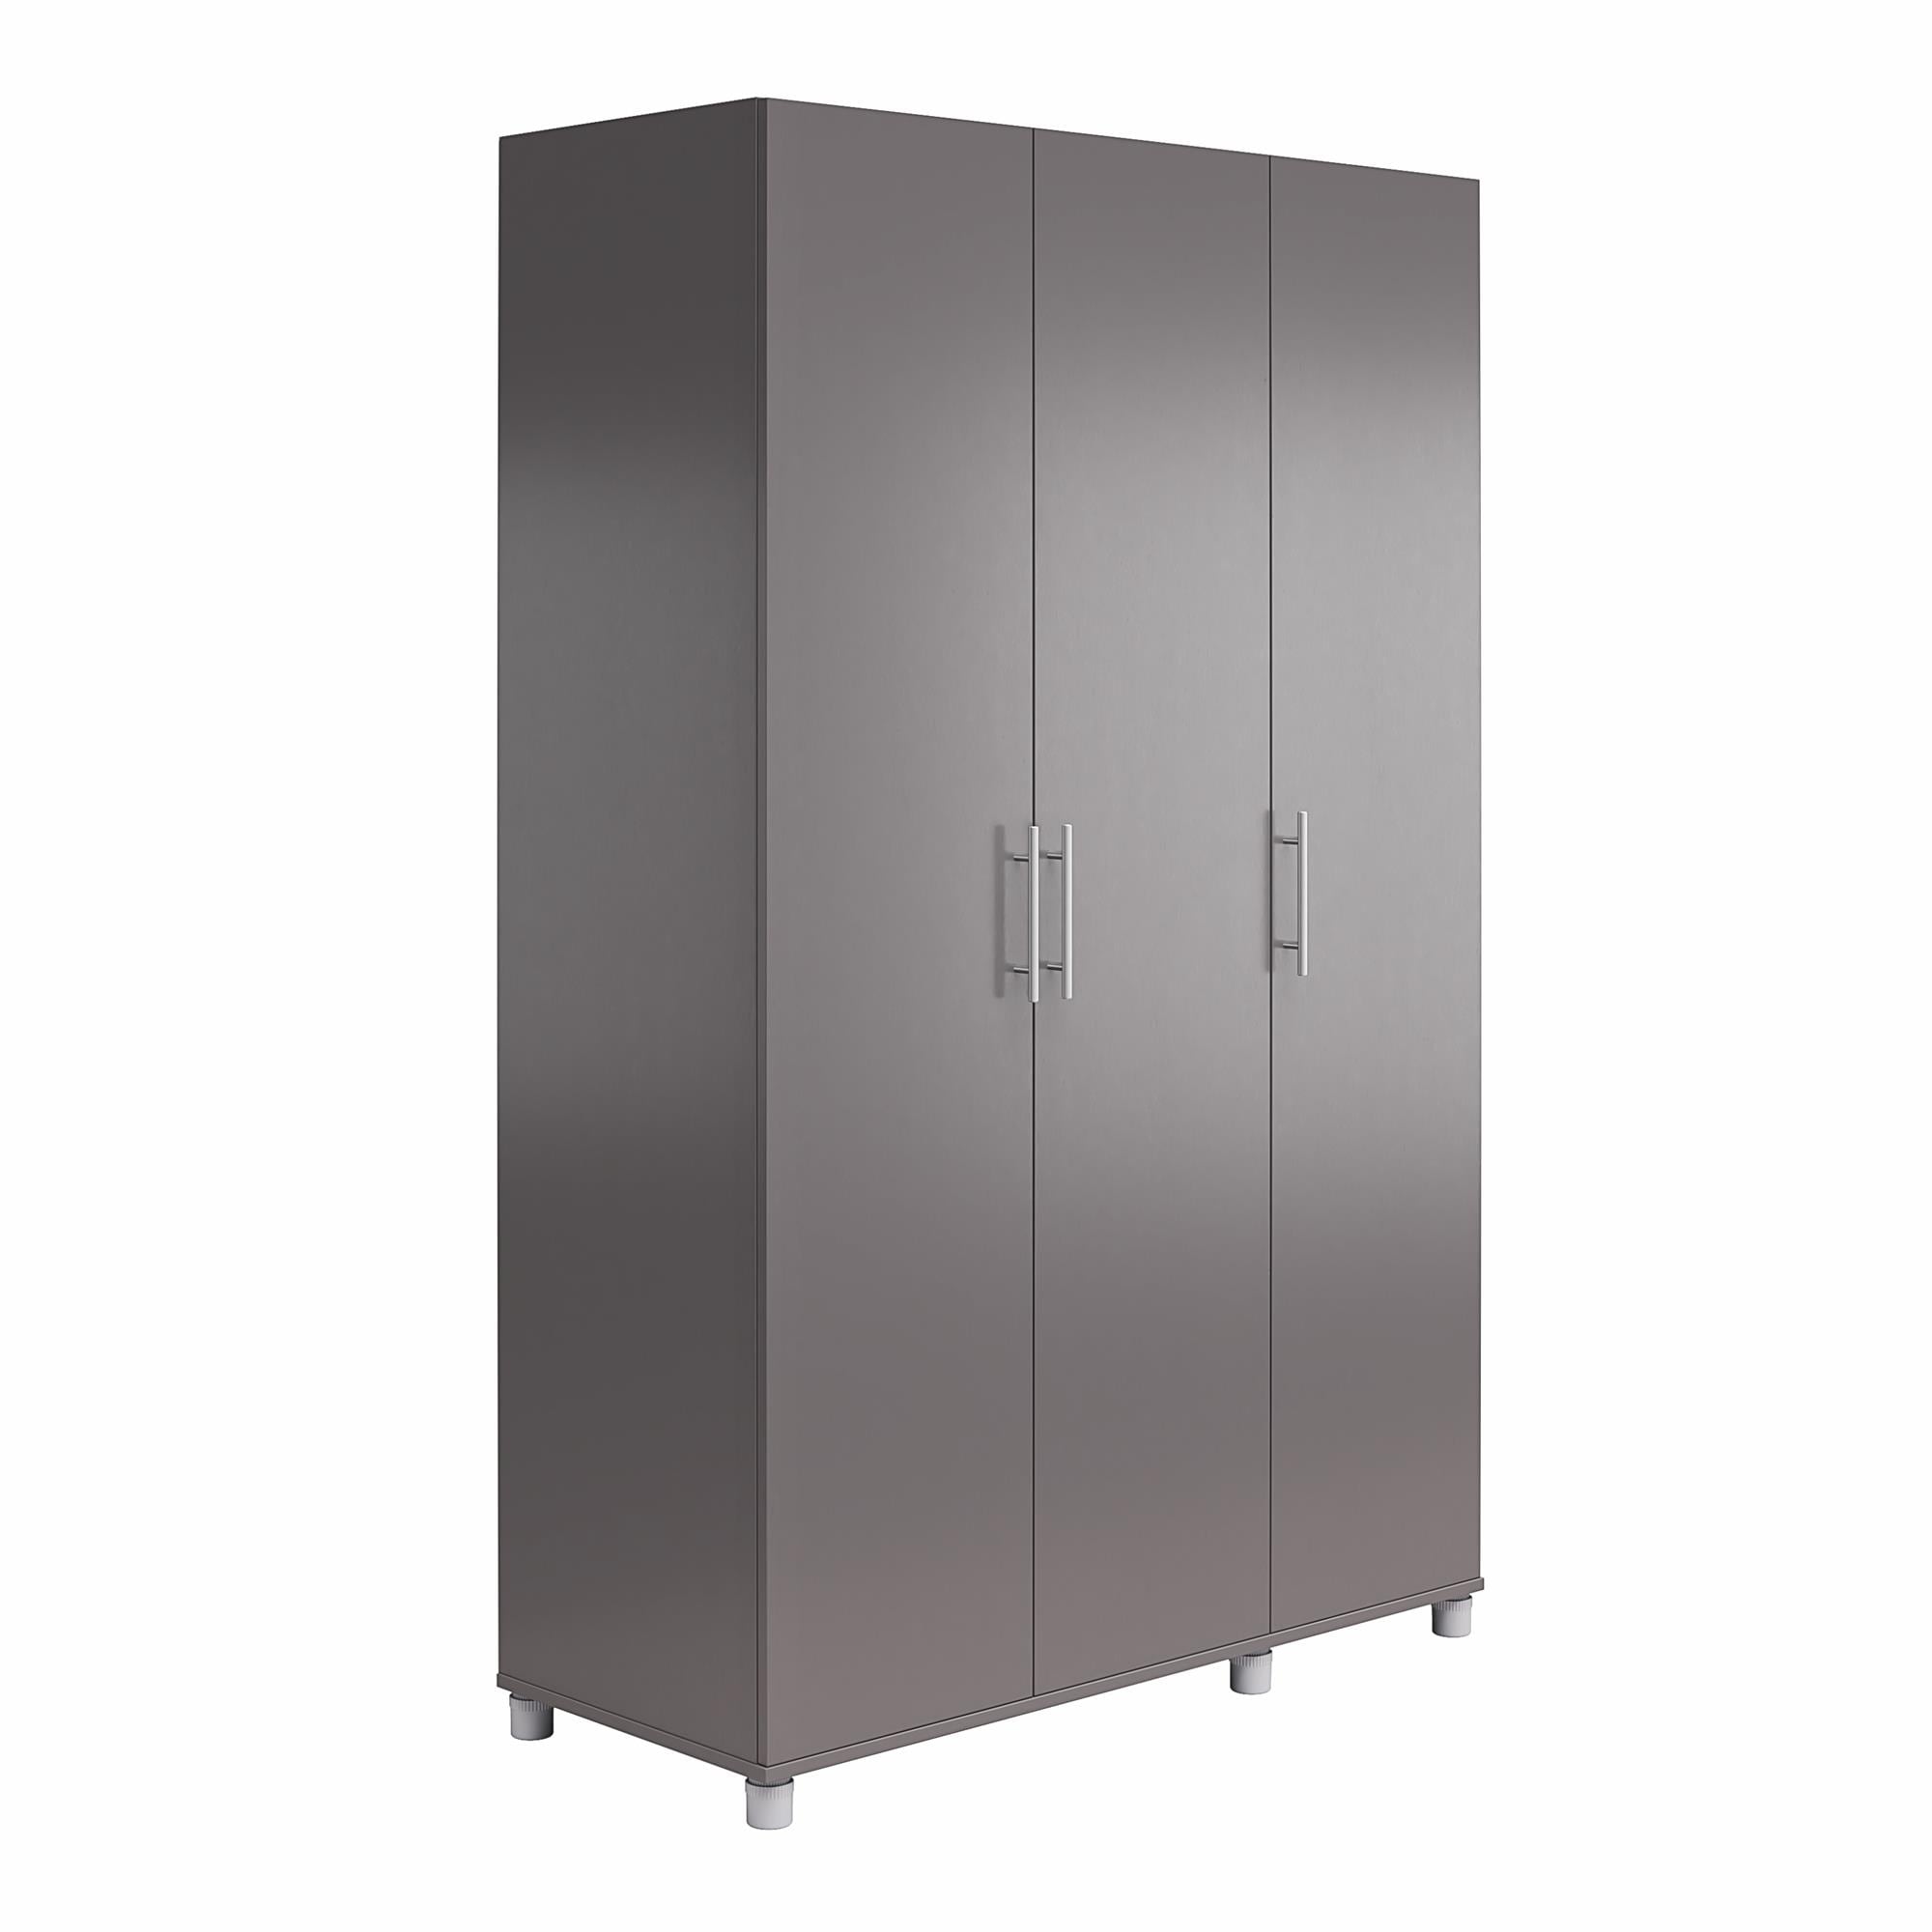 20 Inch Deep Storage Cabinets